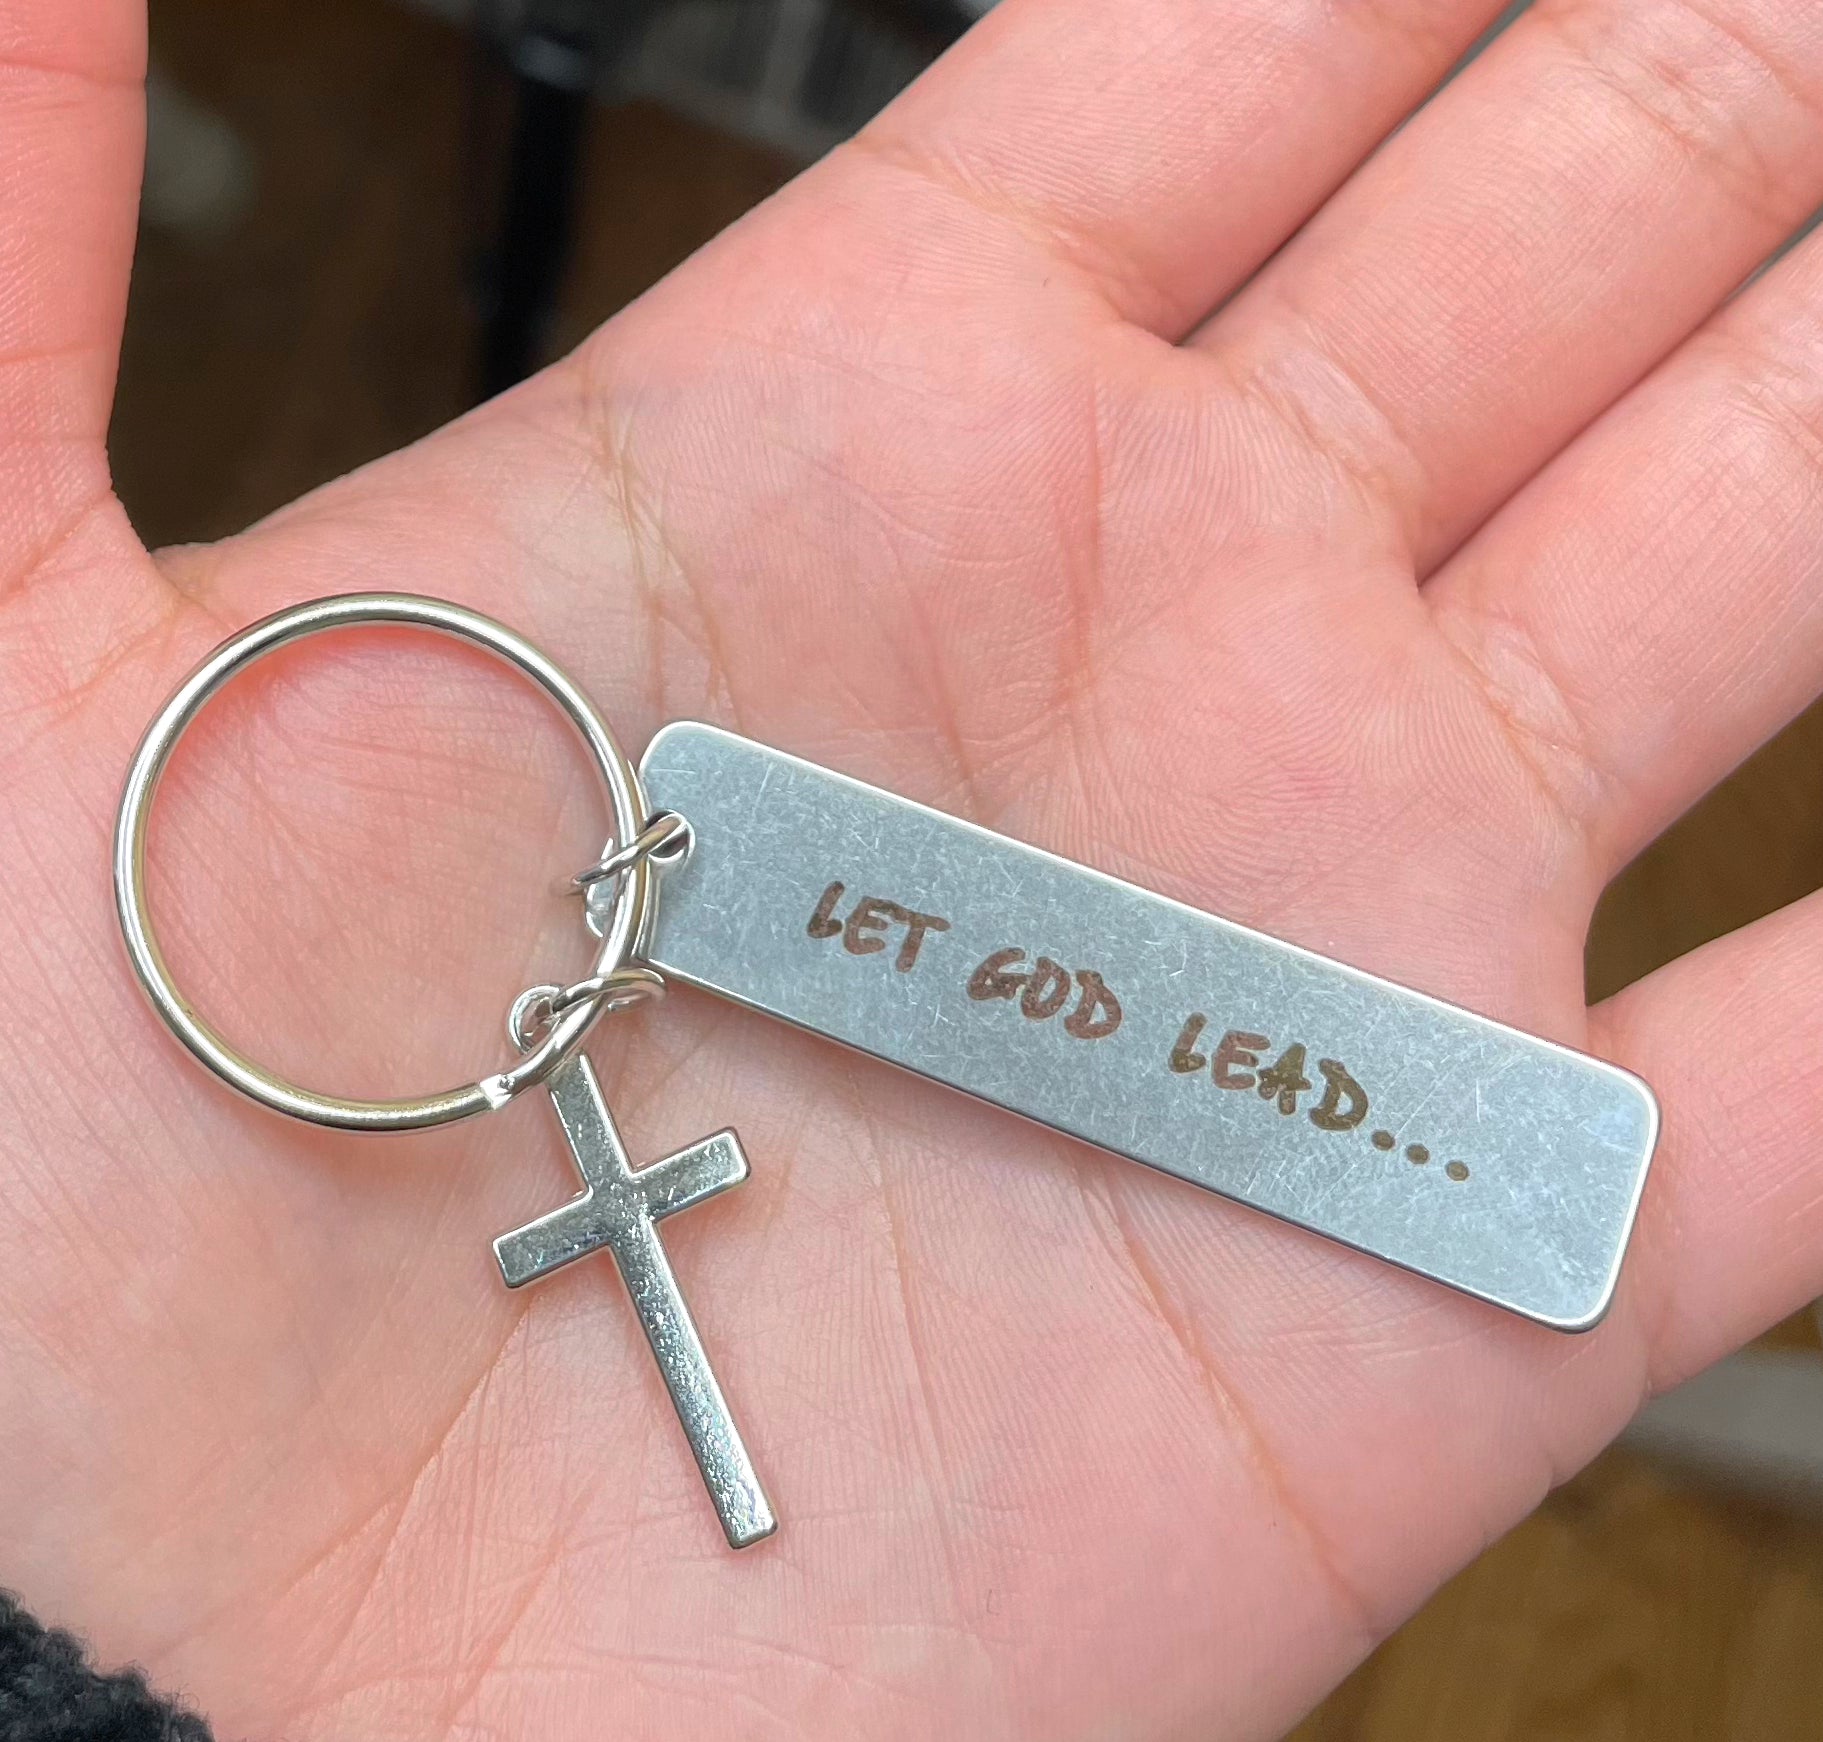 Let God Lead | keychain - Apparel for God LLC